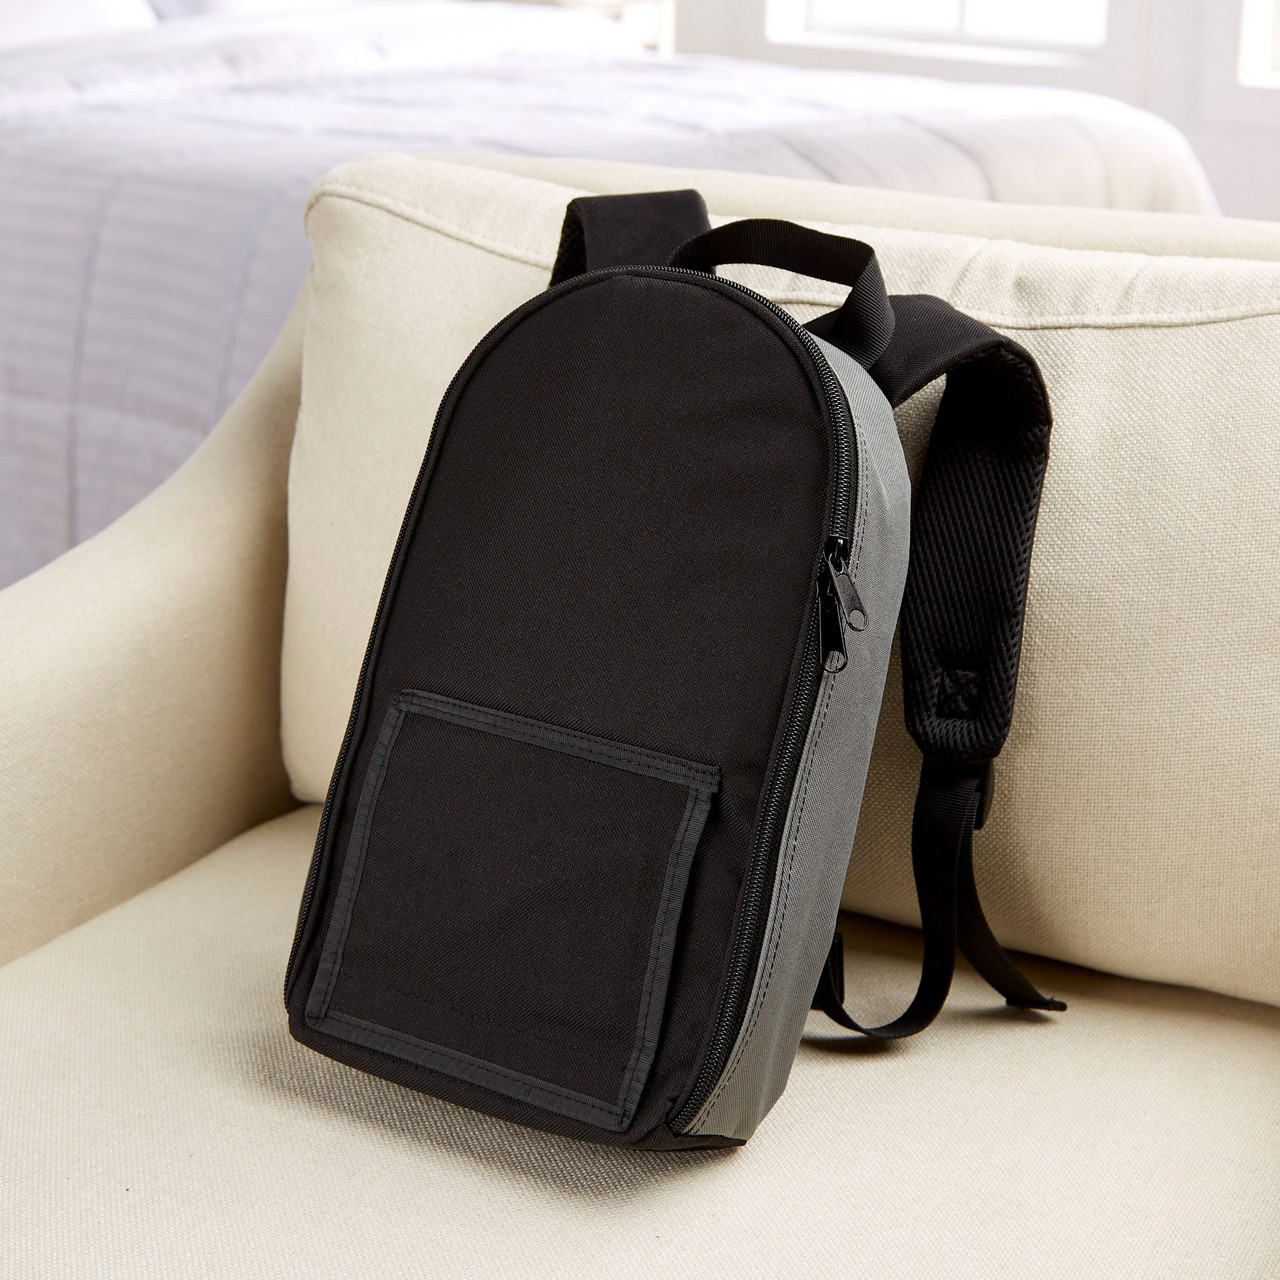 Fluid Motion Backpack: Best Feeding Tube and TPN Backpack Black